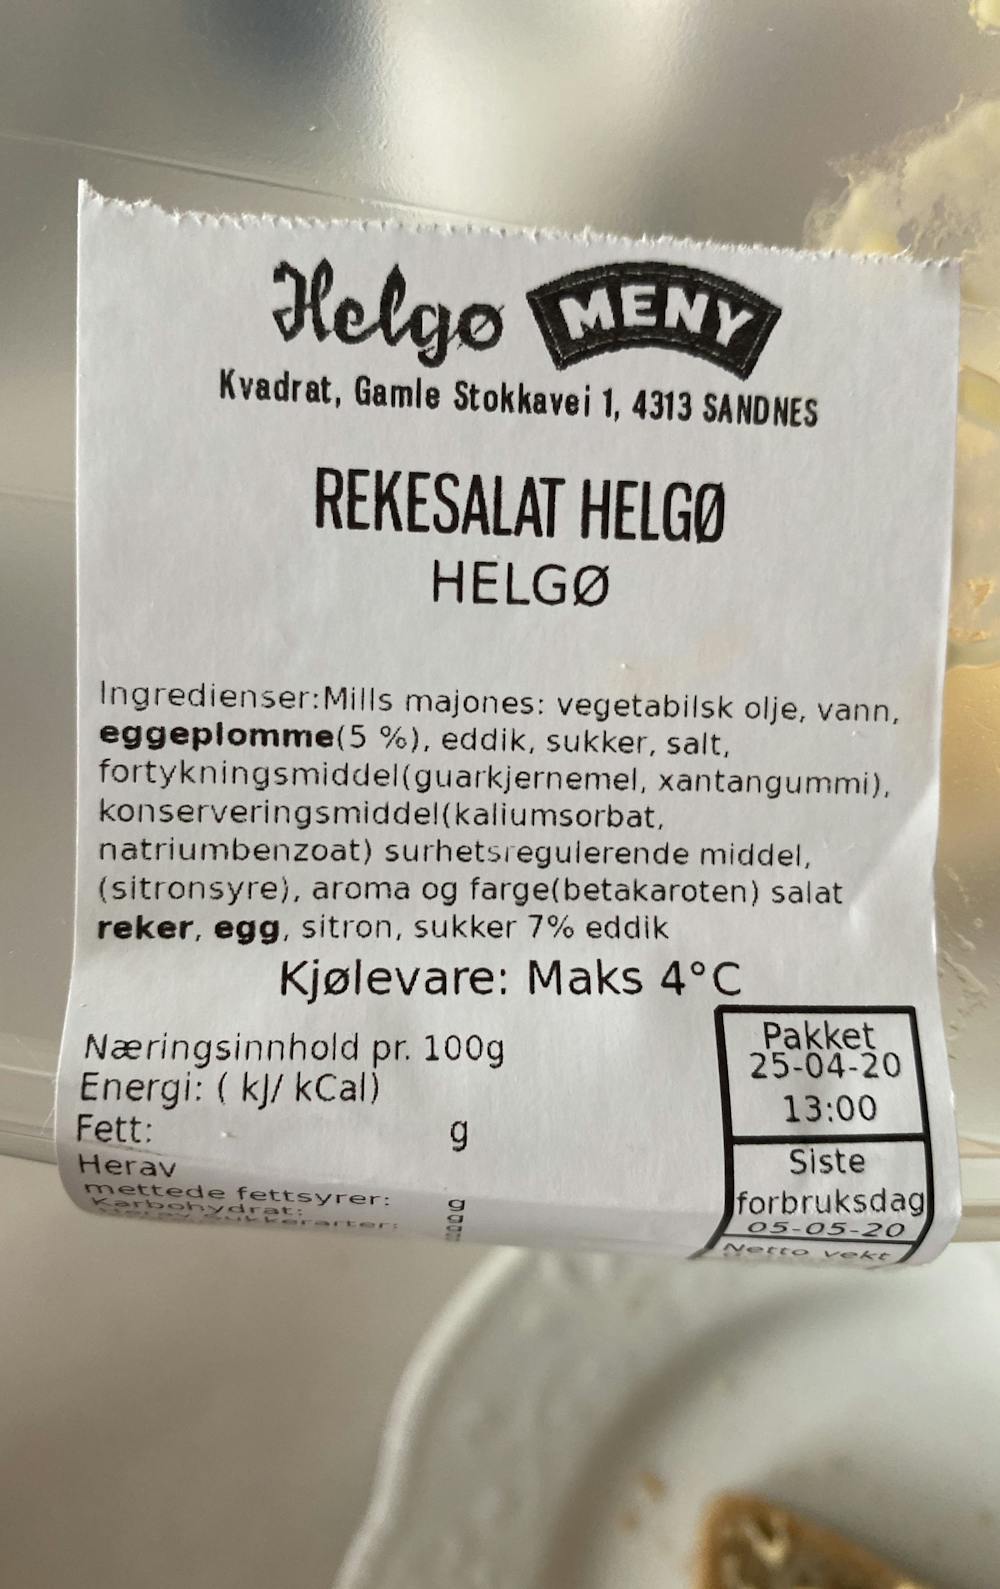 Ingredienslisten til Helgø Meny Rekesalat